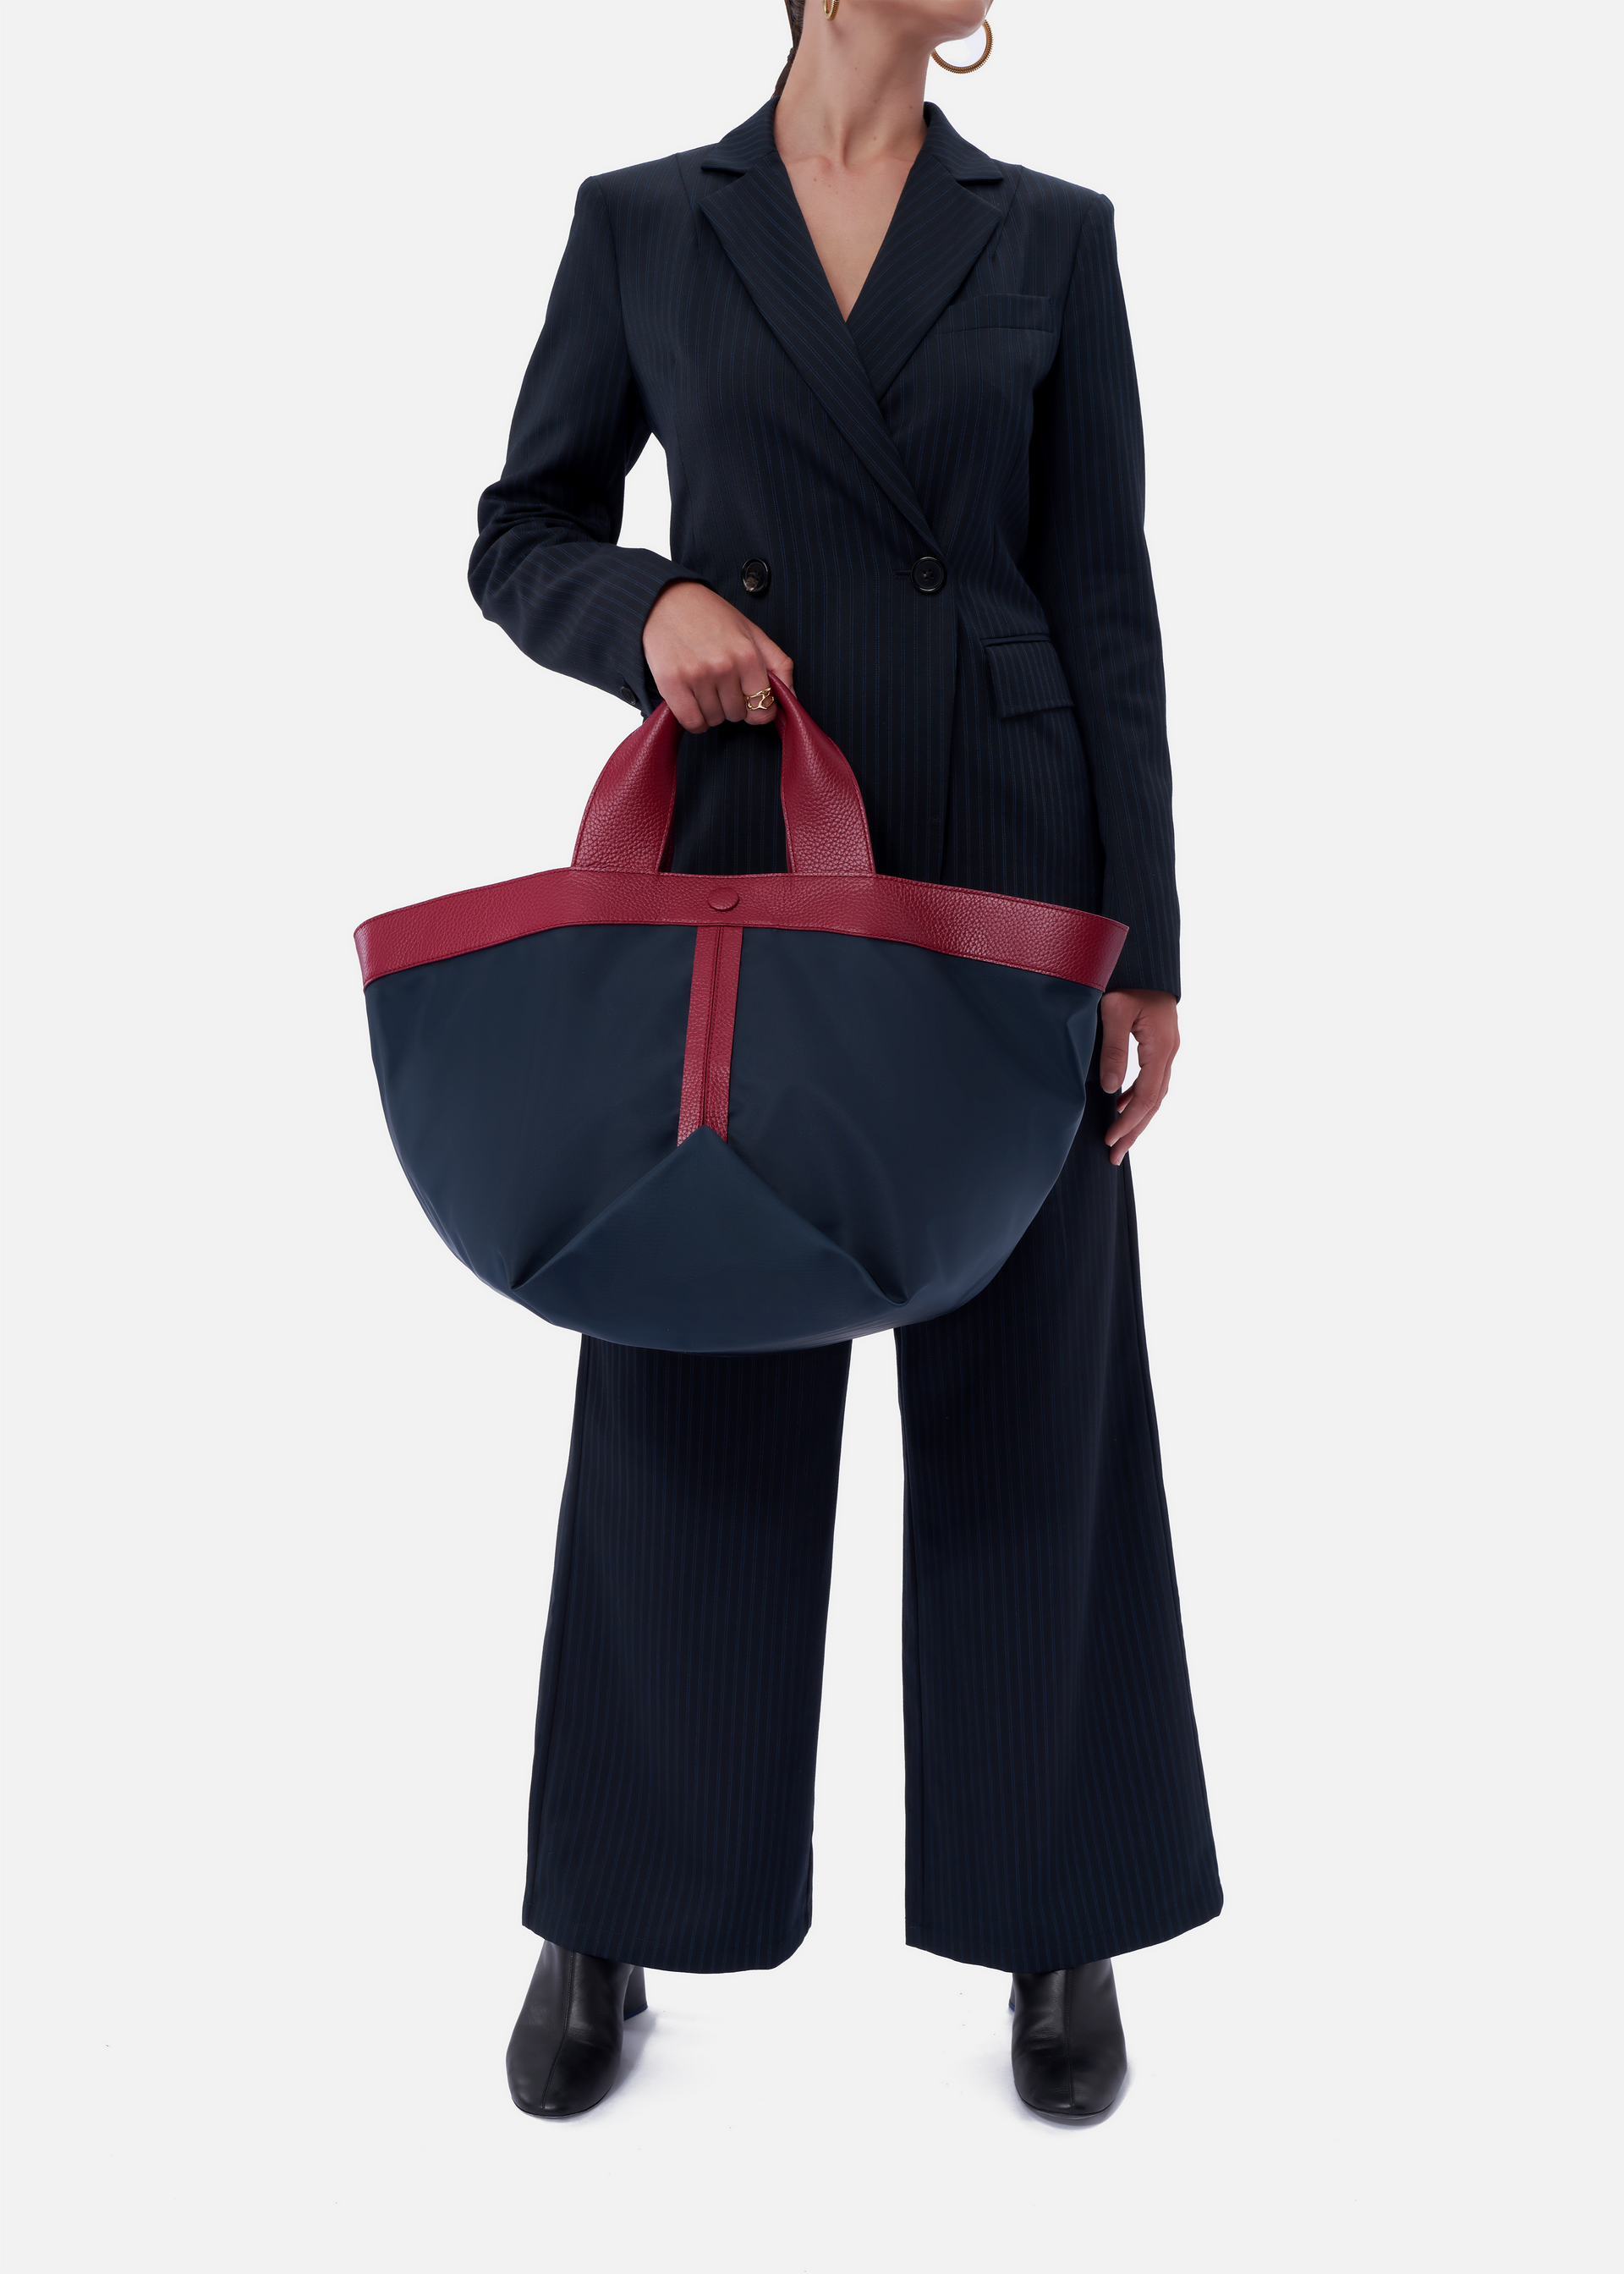 Nylon shopper bag with pockets